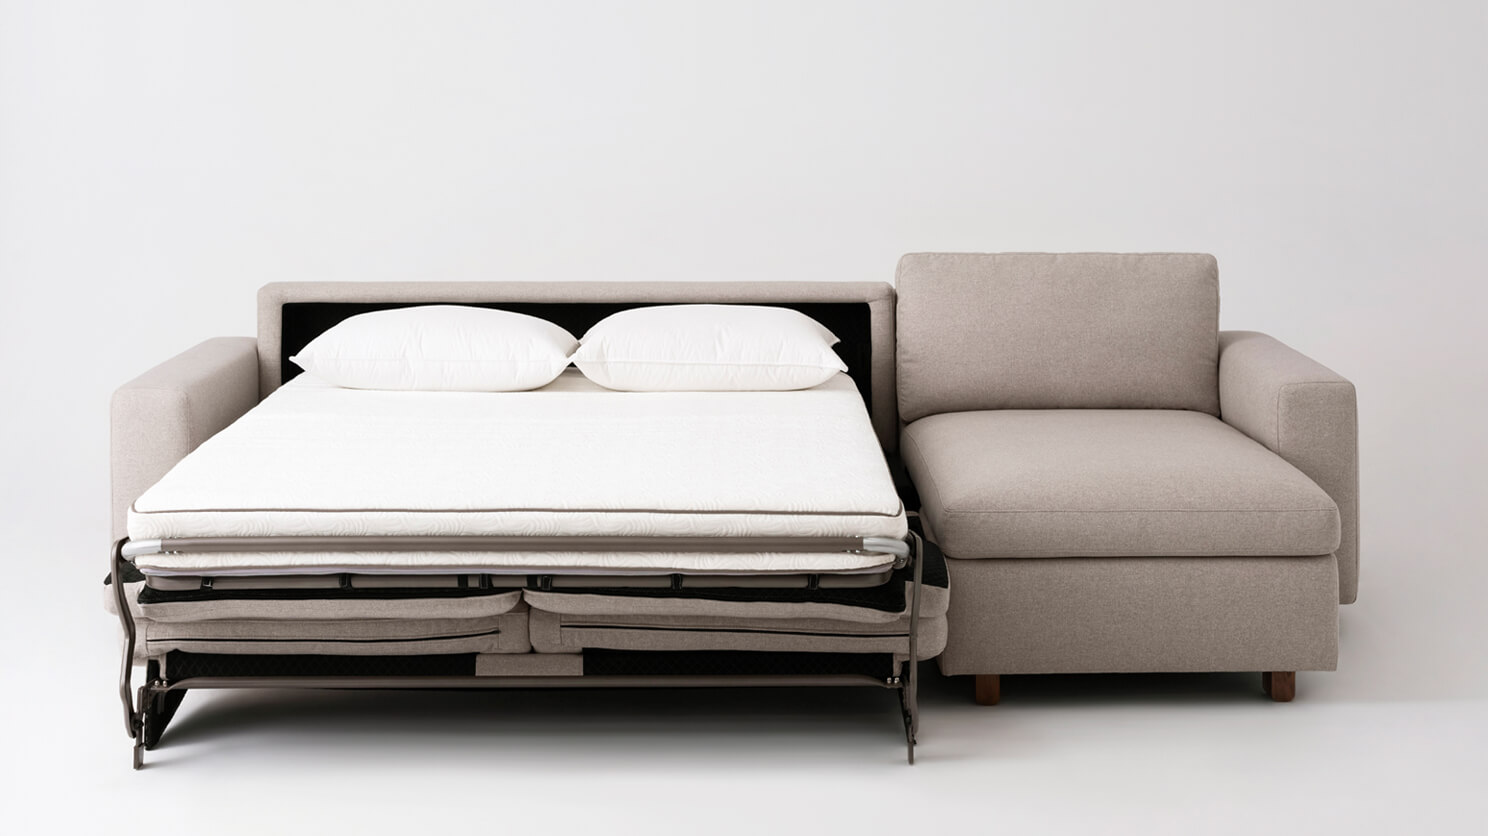 Reva Sectional Sofa Sleeper Customize, 2 Piece Sectional Sleeper Sofa With Storage